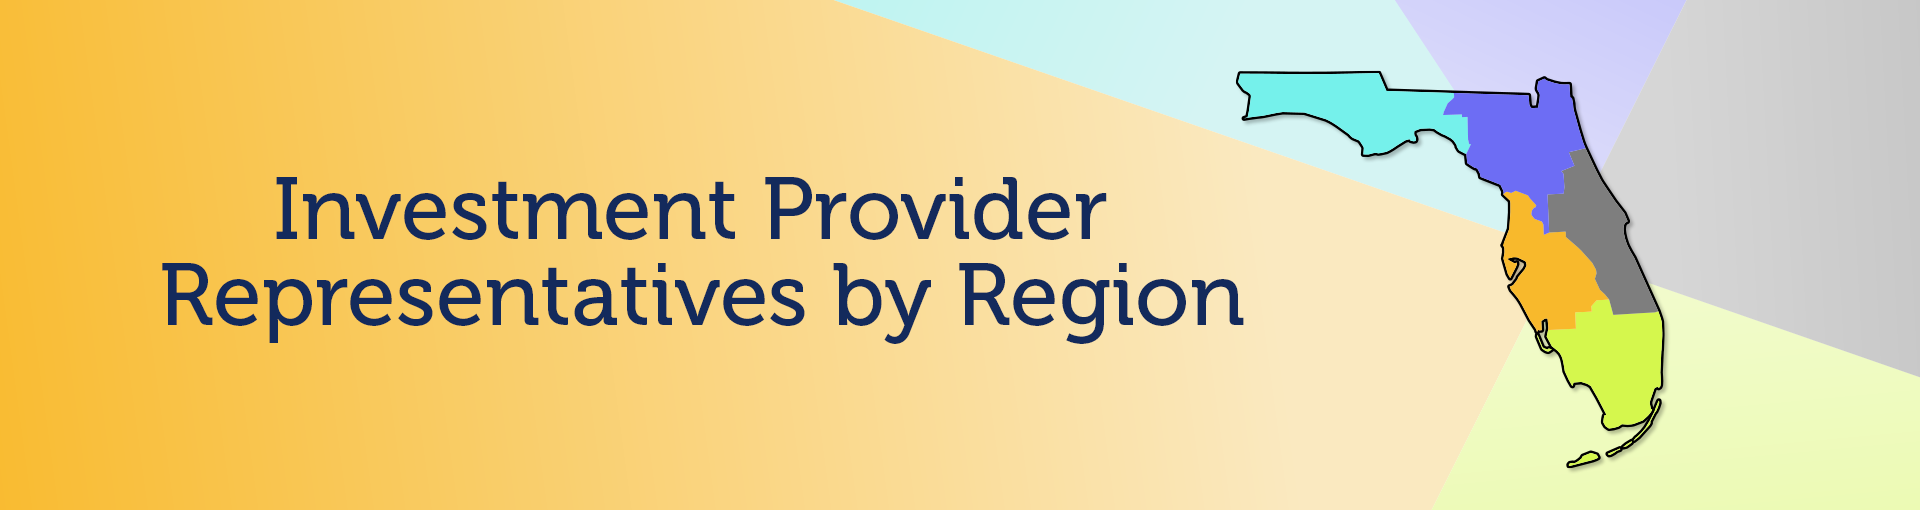 Investment Provider Representatives by Region